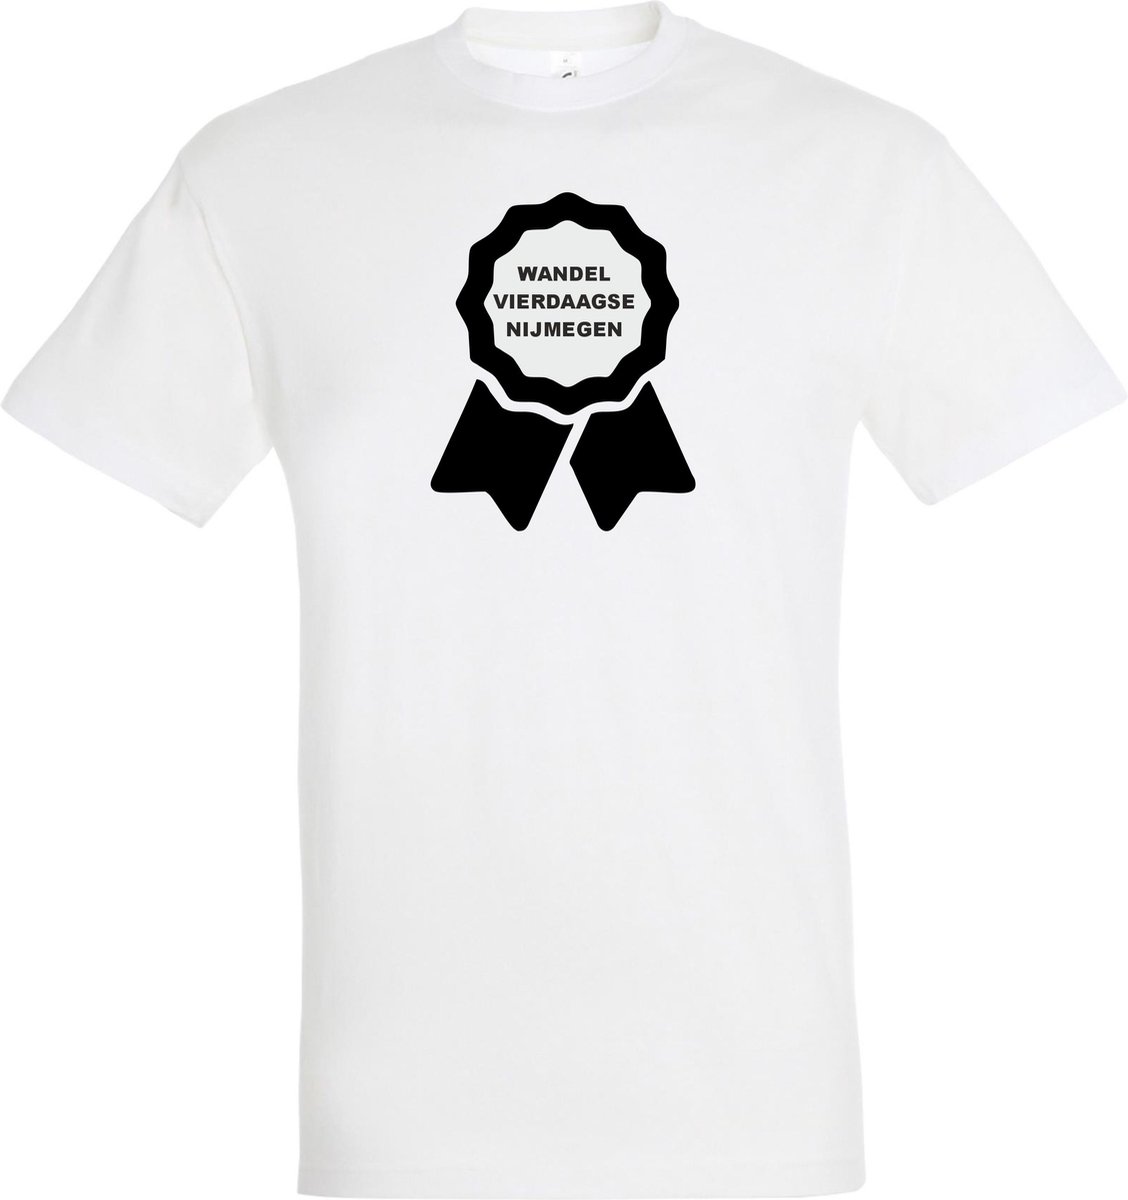 T-shirt LIntje vierdaagse Nijmegen |Wandelvierdaagse | vierdaagse Nijmegen | Roze woensdag | Wit | maat XL